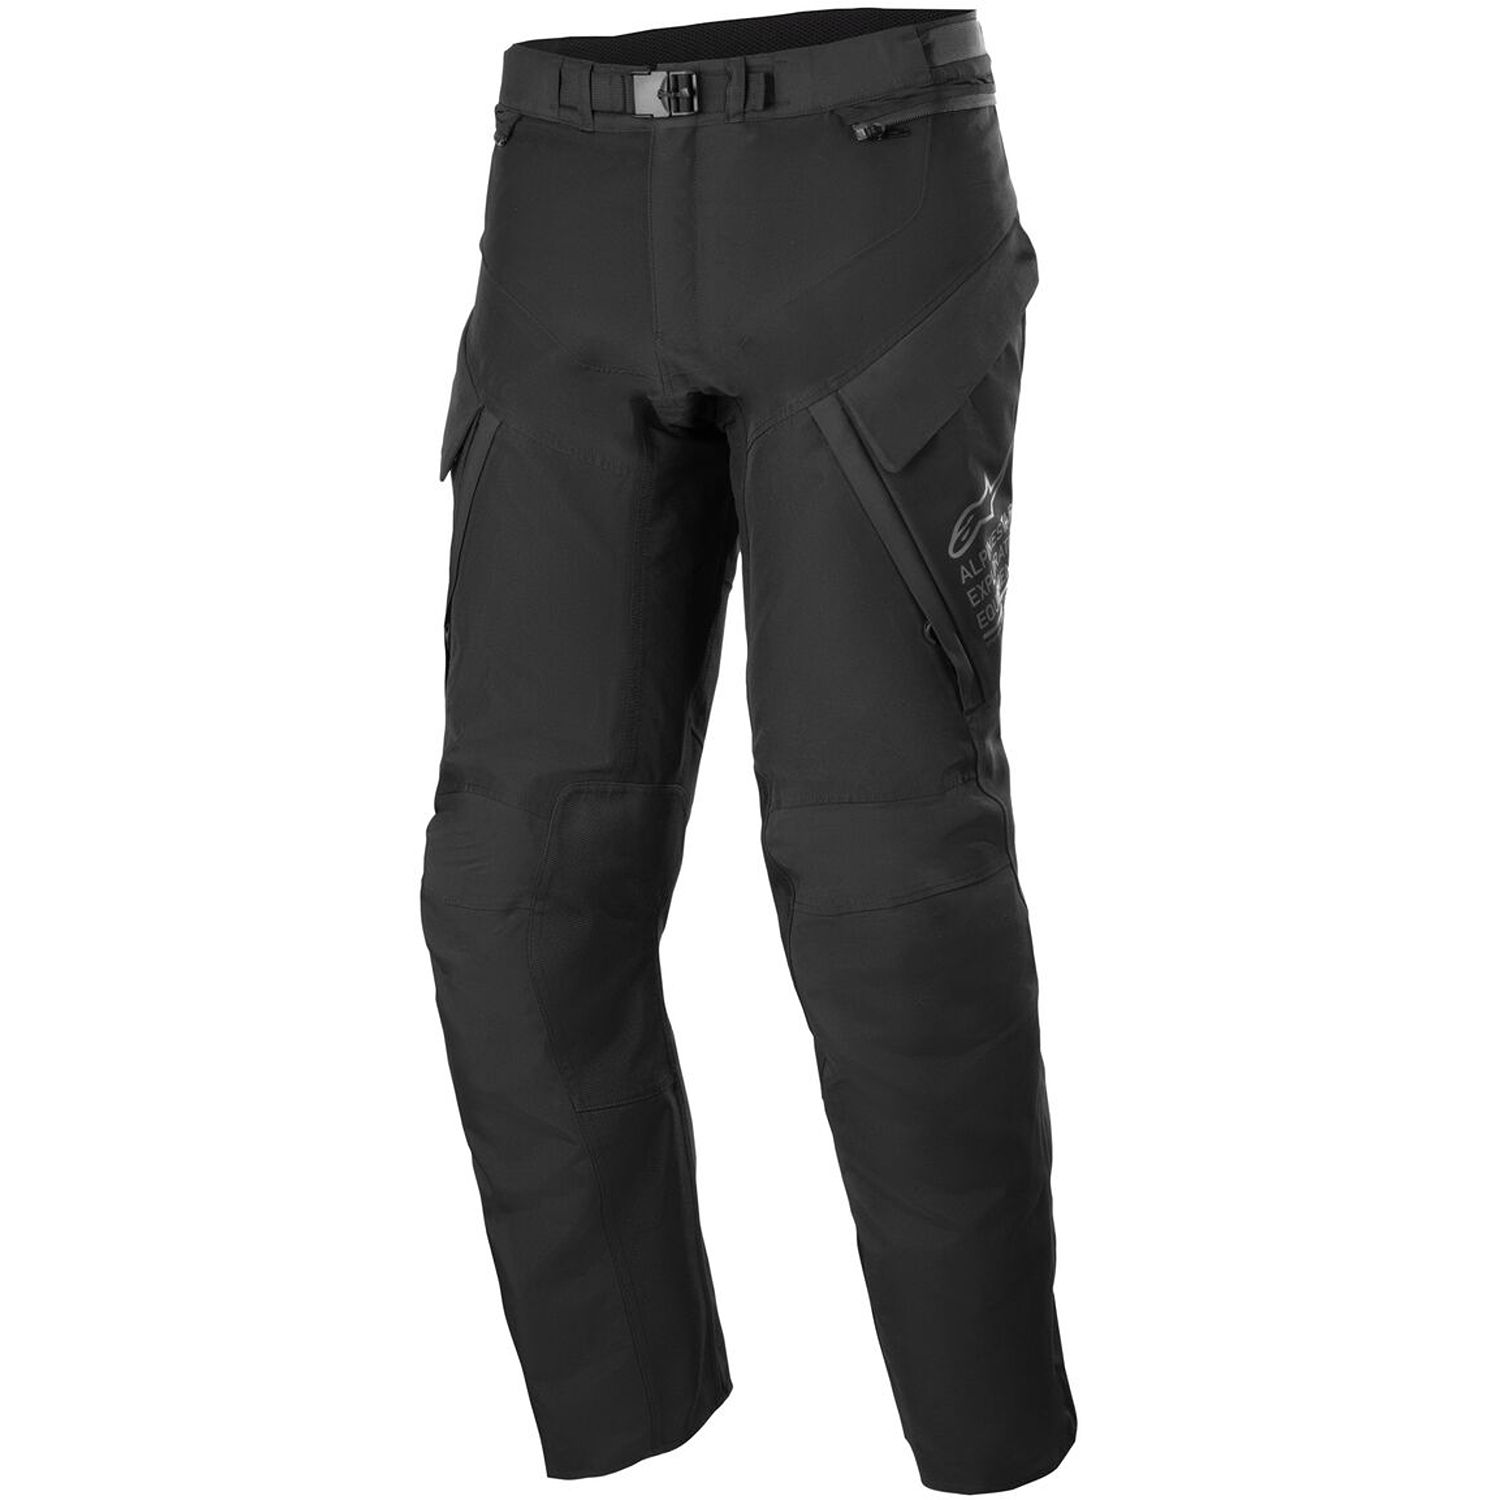 Image of Alpinestars ST-7 2L Gore-Tex Short Length Pants Black Dark Gray Size M ID 8059347283203